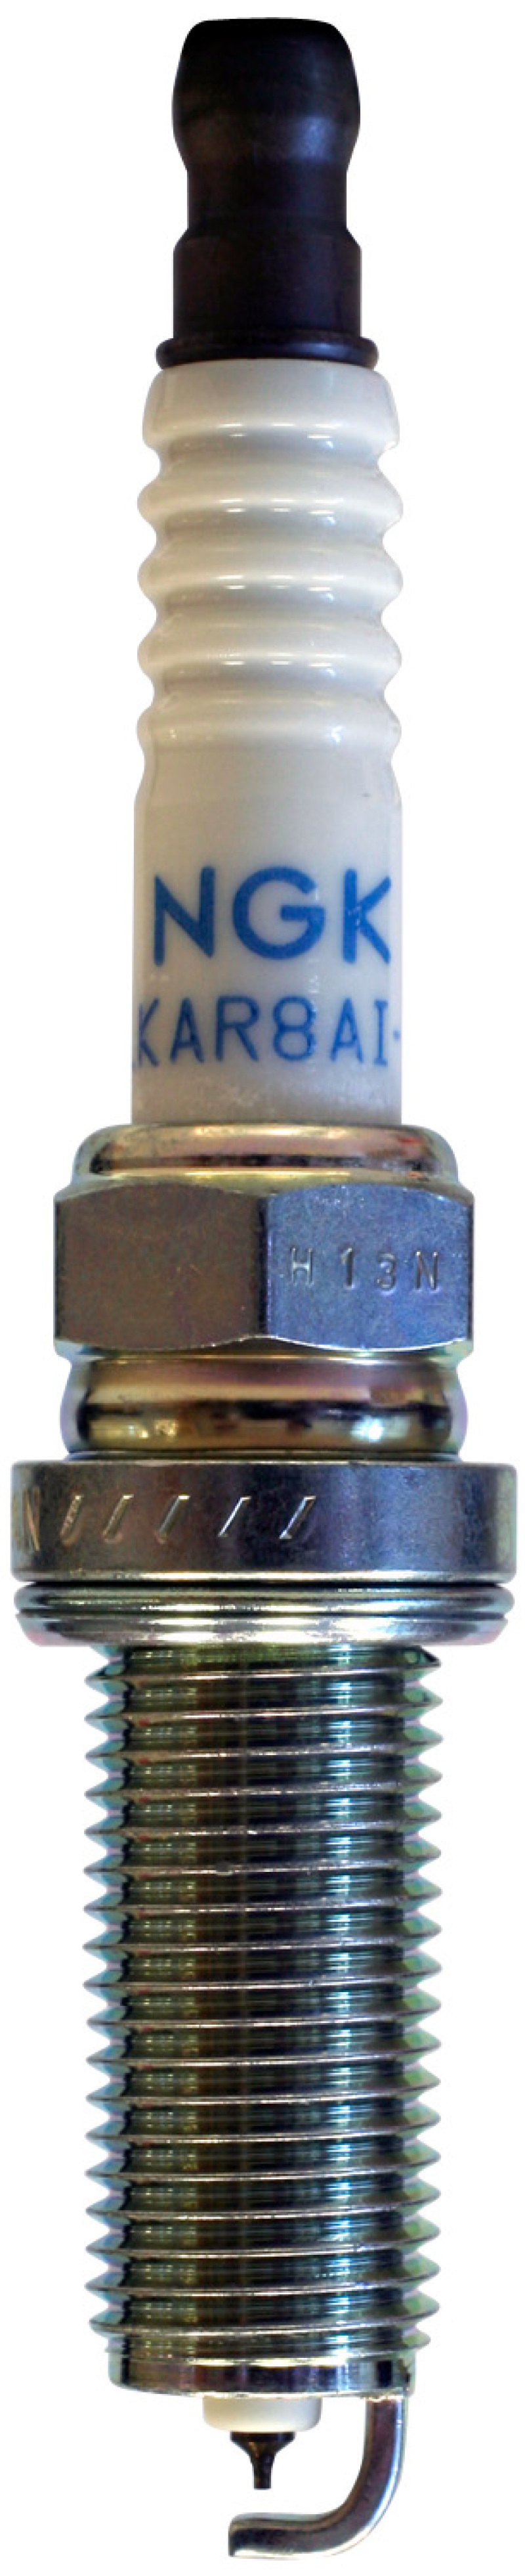 NGK Iridium Stock Spark Plug For LKAR8BI9 - 1553